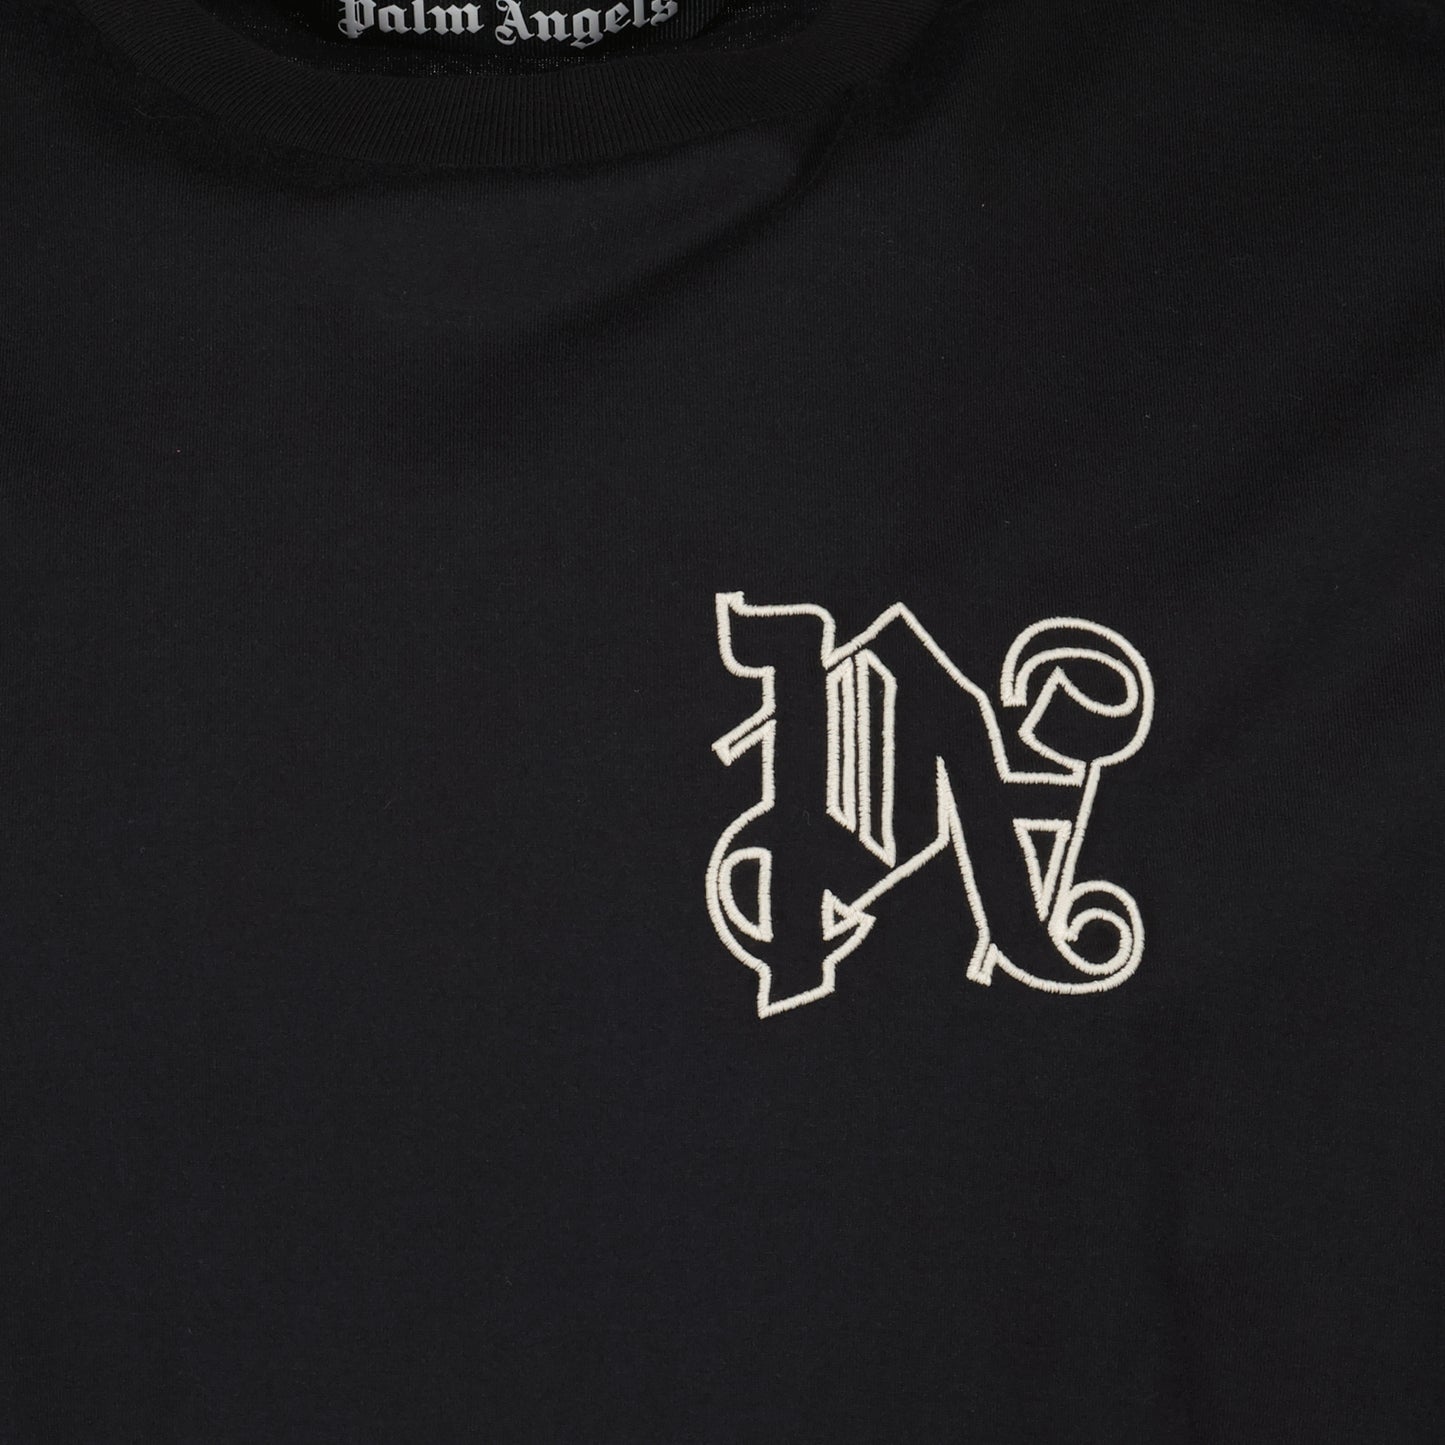 Palm Angel monogram t-shirt